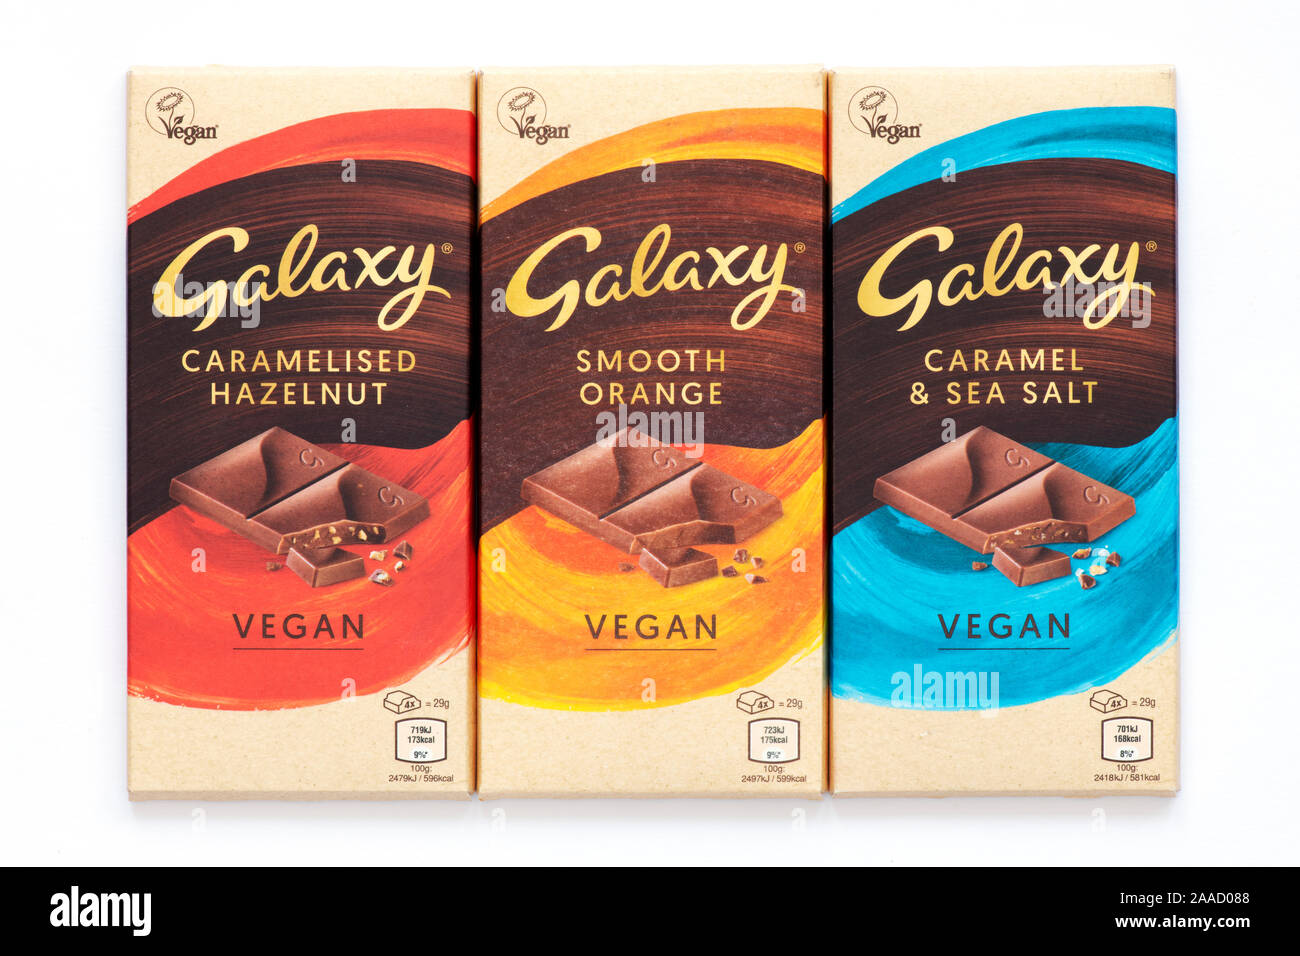 Galaxy Vegan Chocolate. Caramelised Hazelnut, Smooth Orange, and Caramel & Sea Salt bars Stock Photo